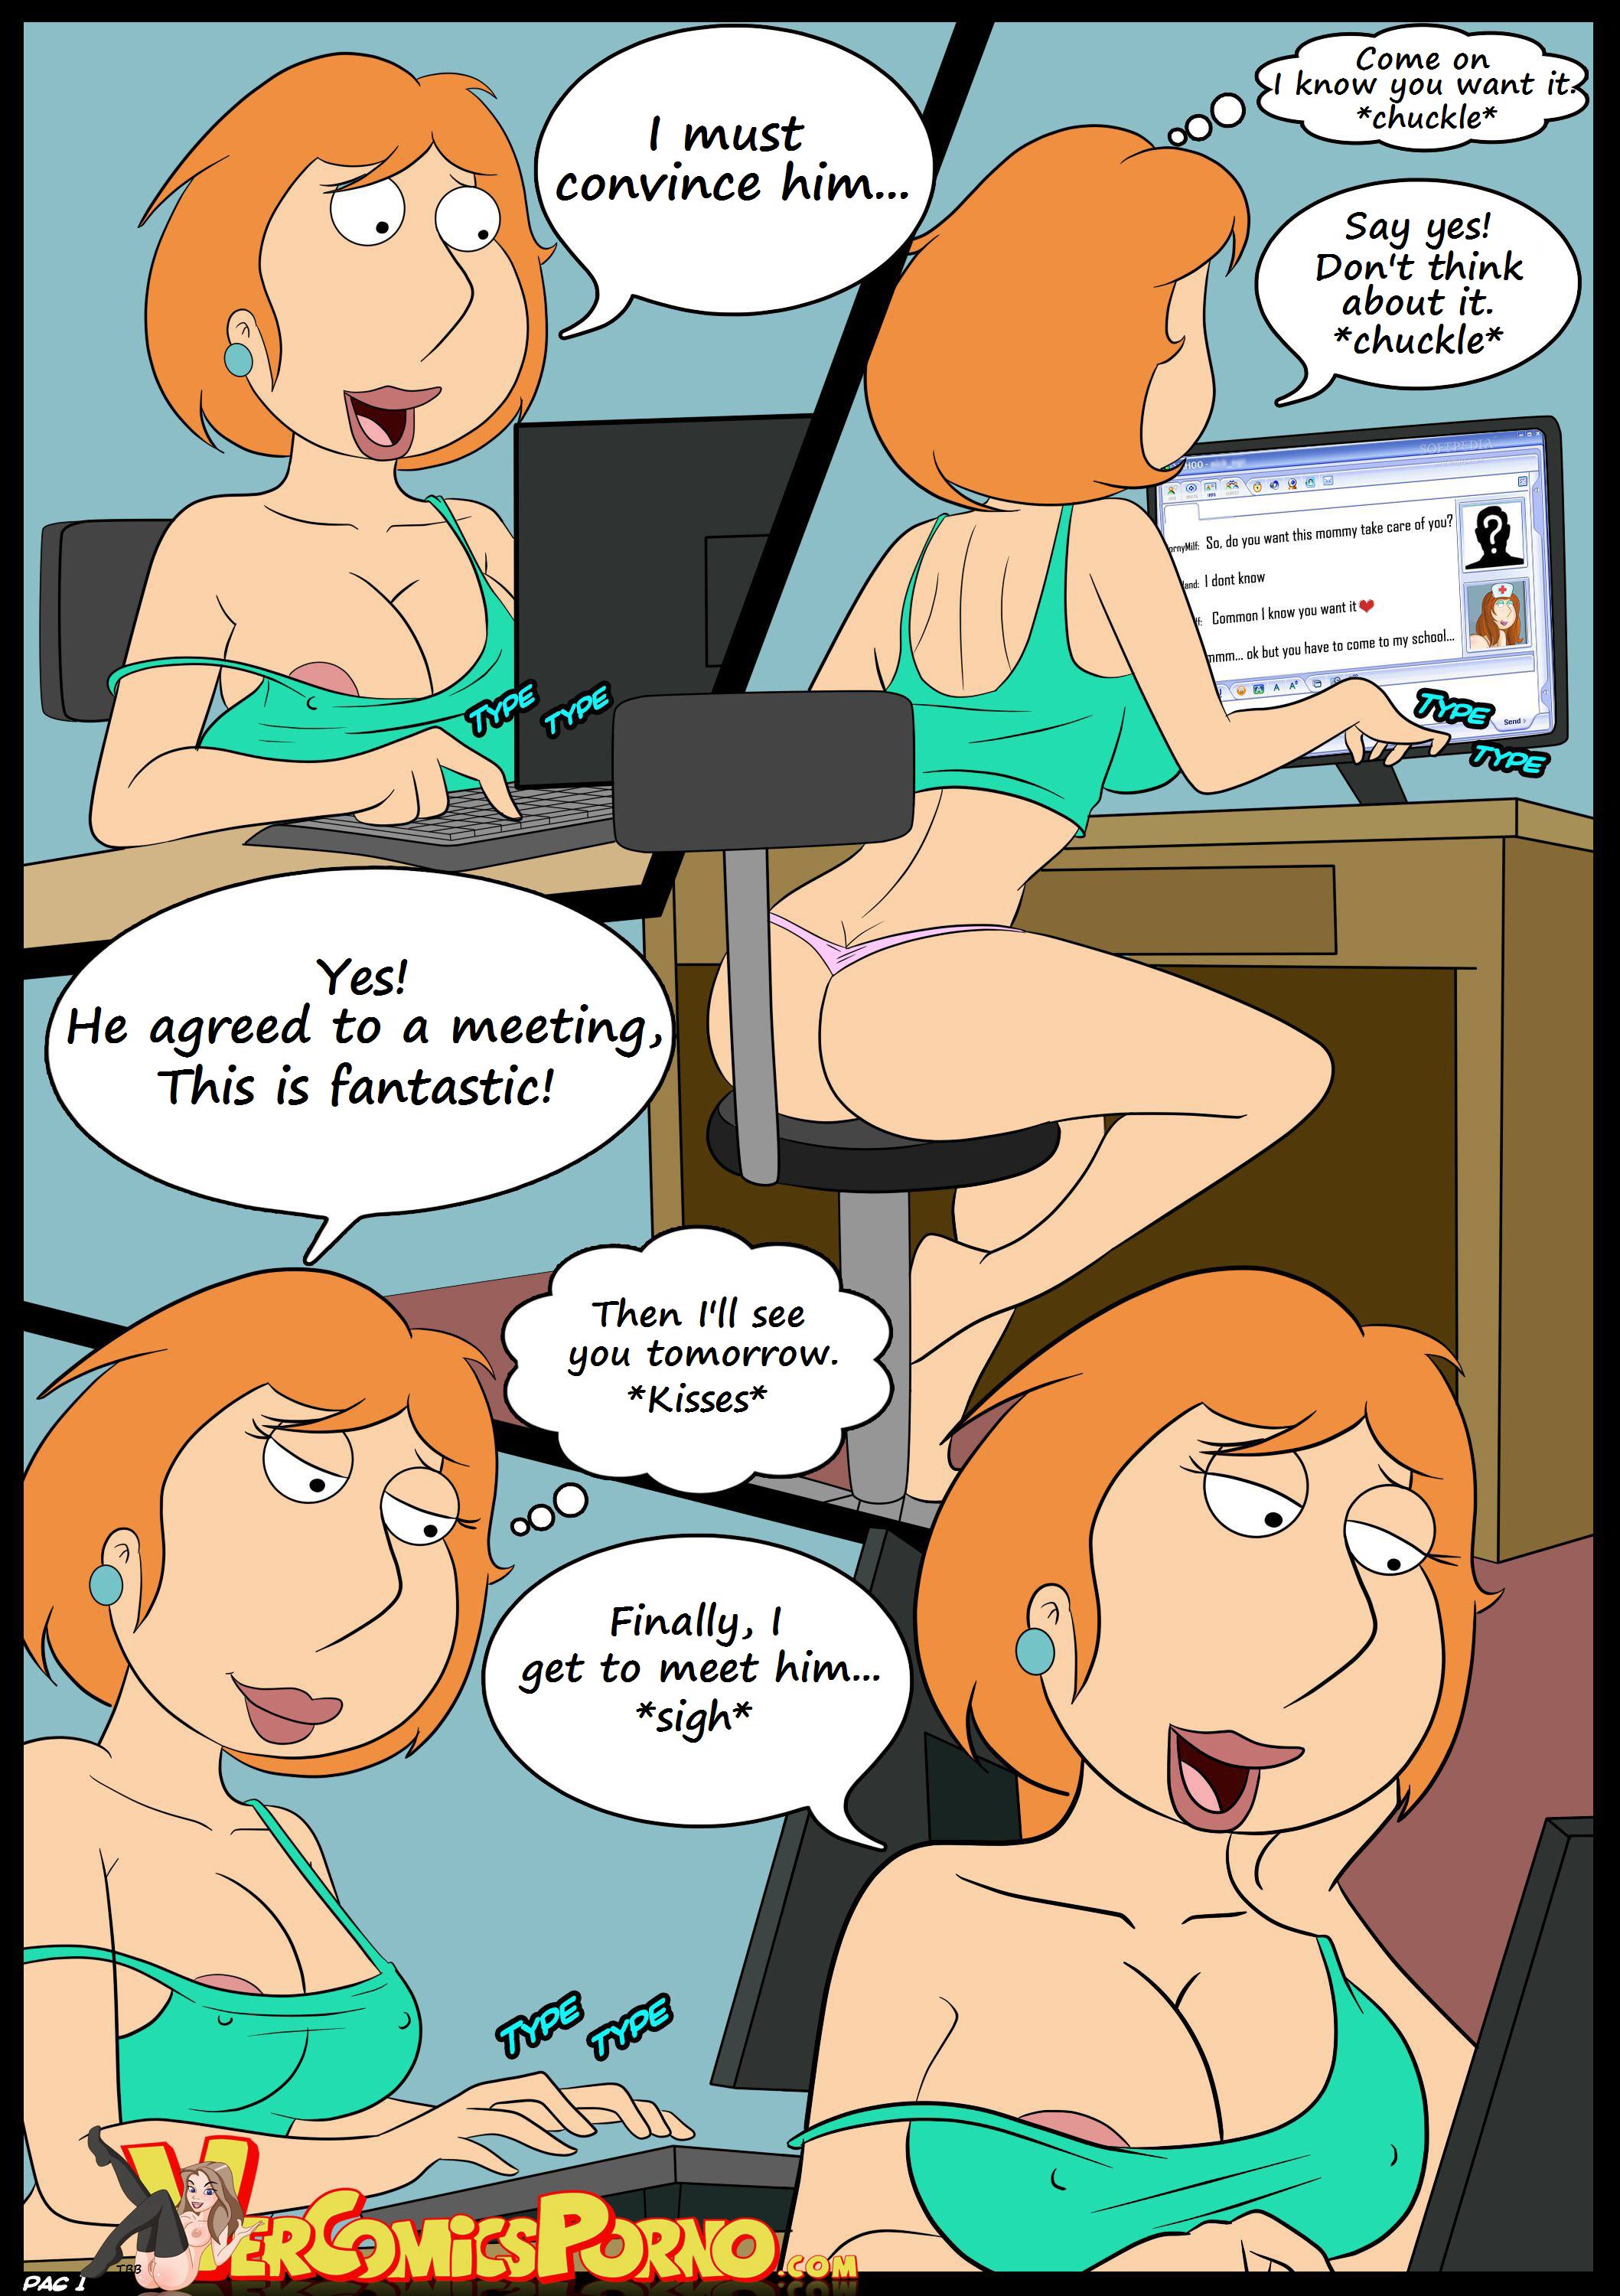 Incest comic strips - MegaPornX.com